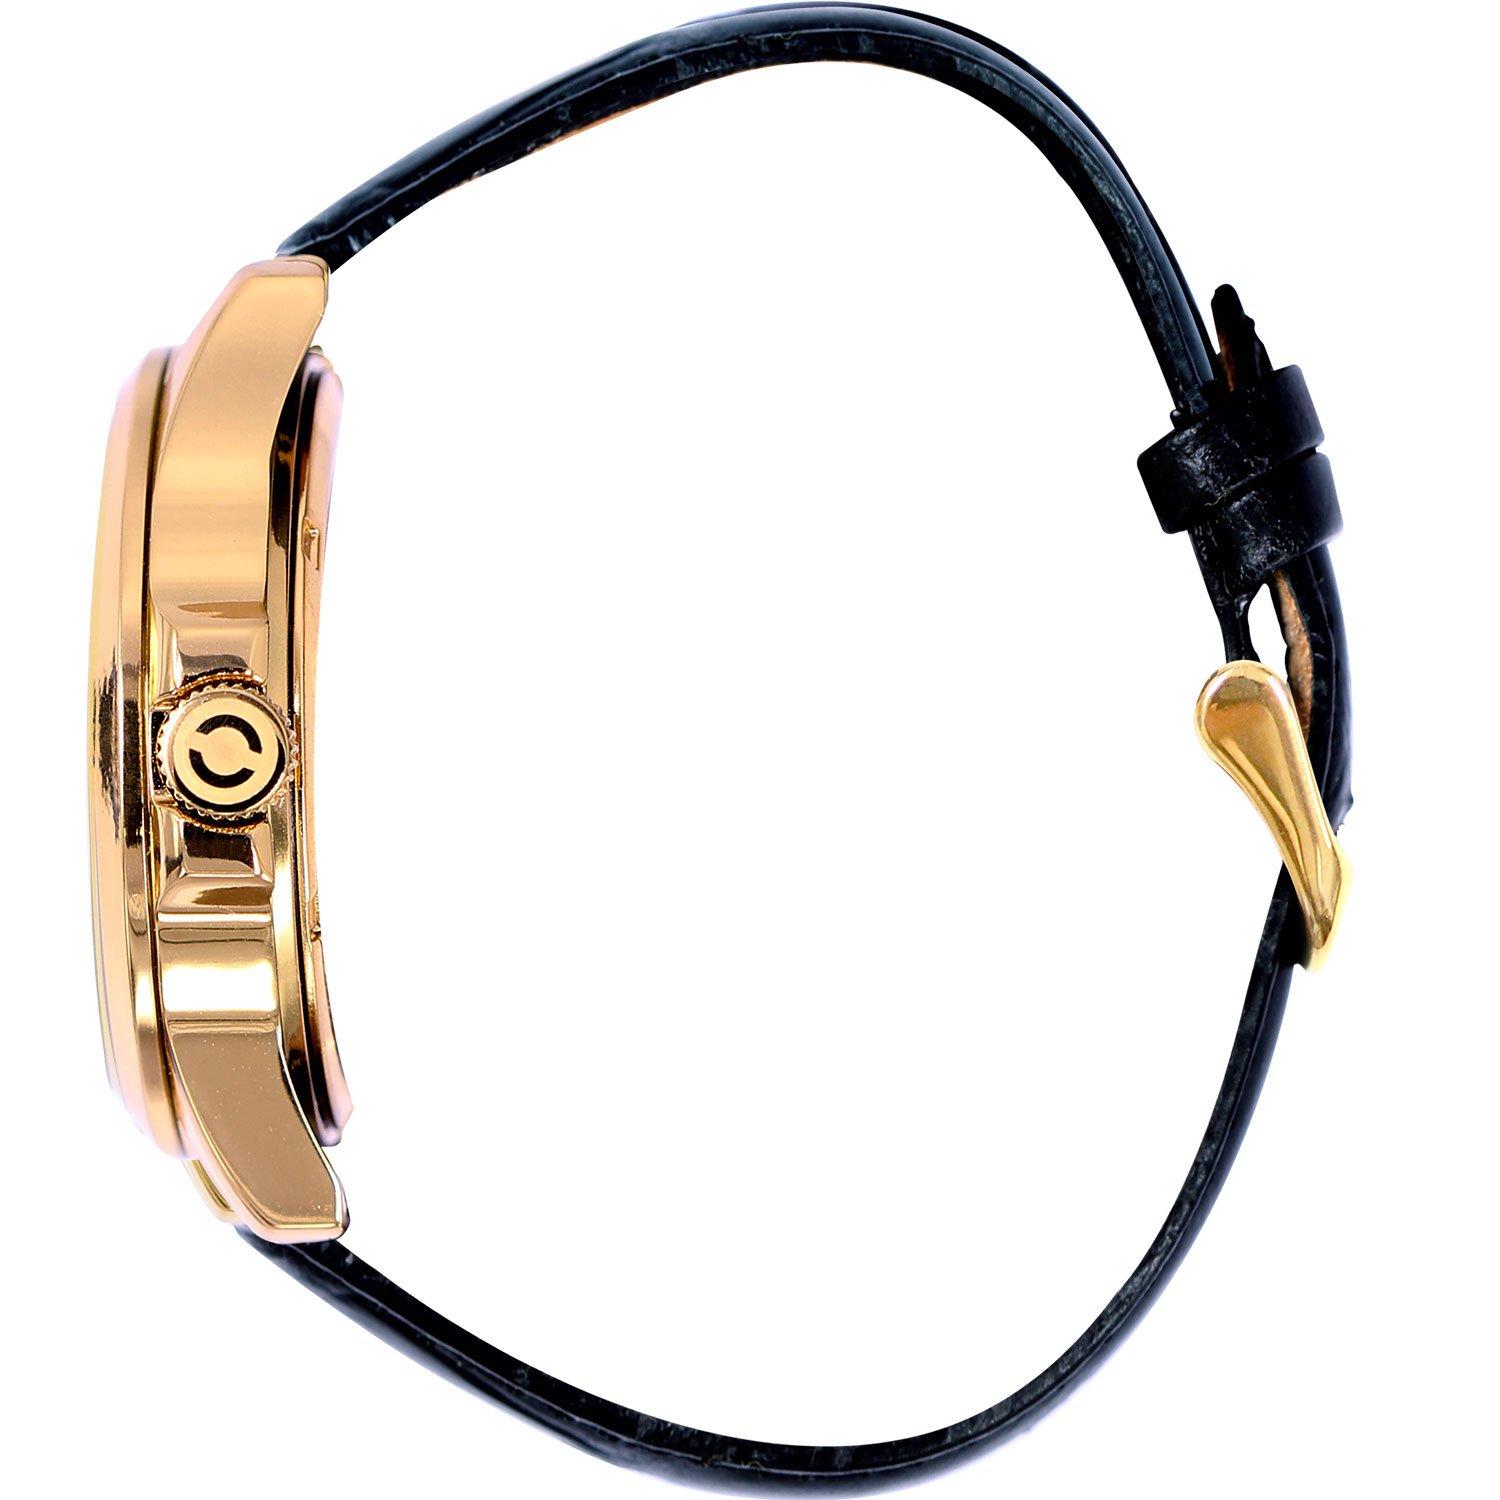 PICONO Mr.&Mrs. Pearl Series - Multi Dial Water Resistant Analog Quartz Watch - No. 4403 (Gold)